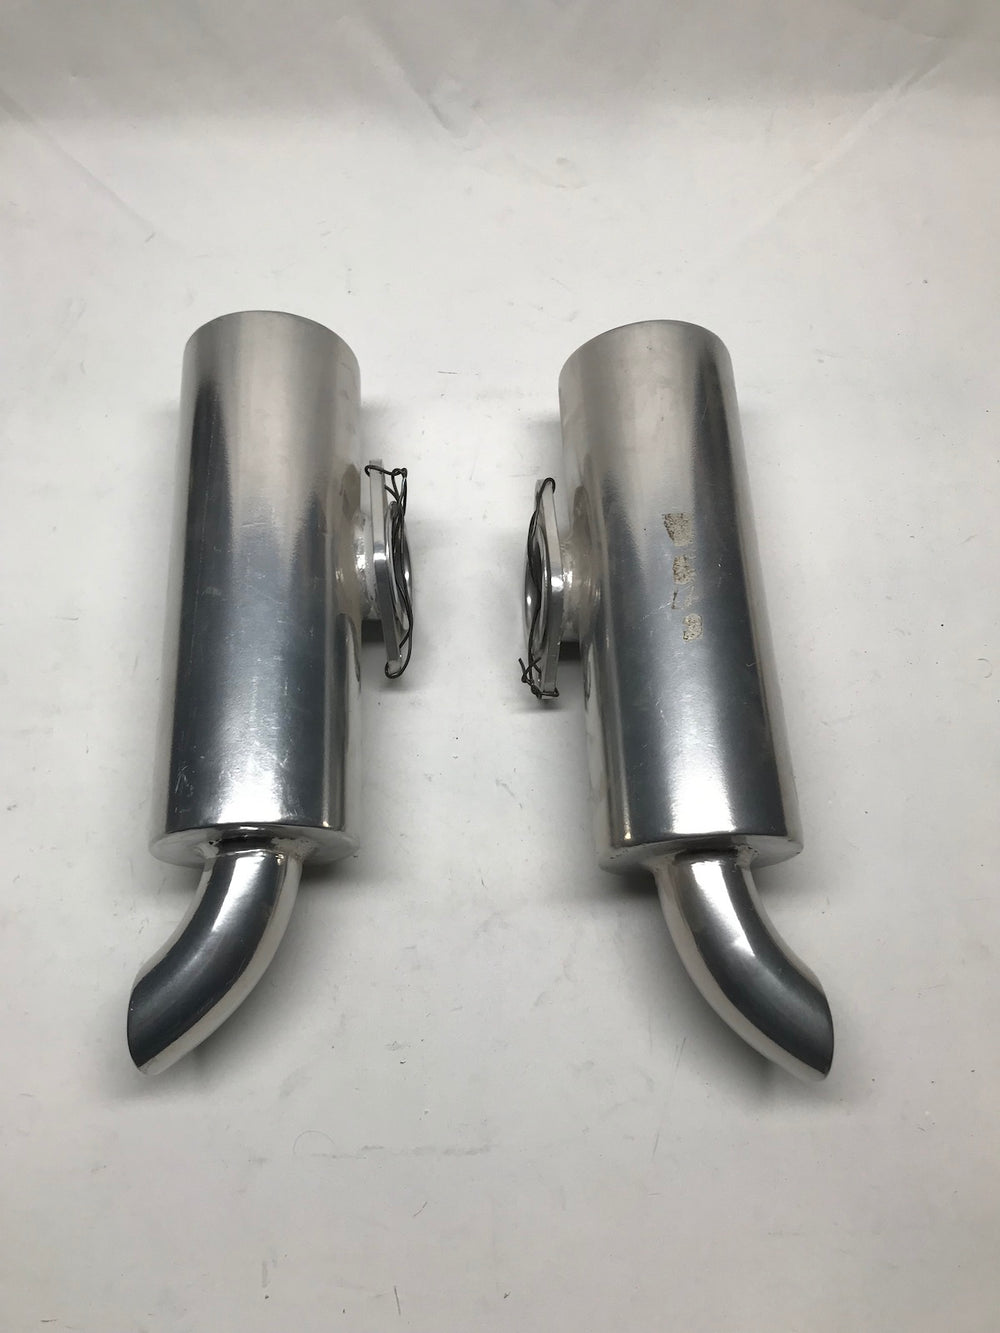 Subaru Engine EJ22 Ceramic Coated Mufflers (Pair)